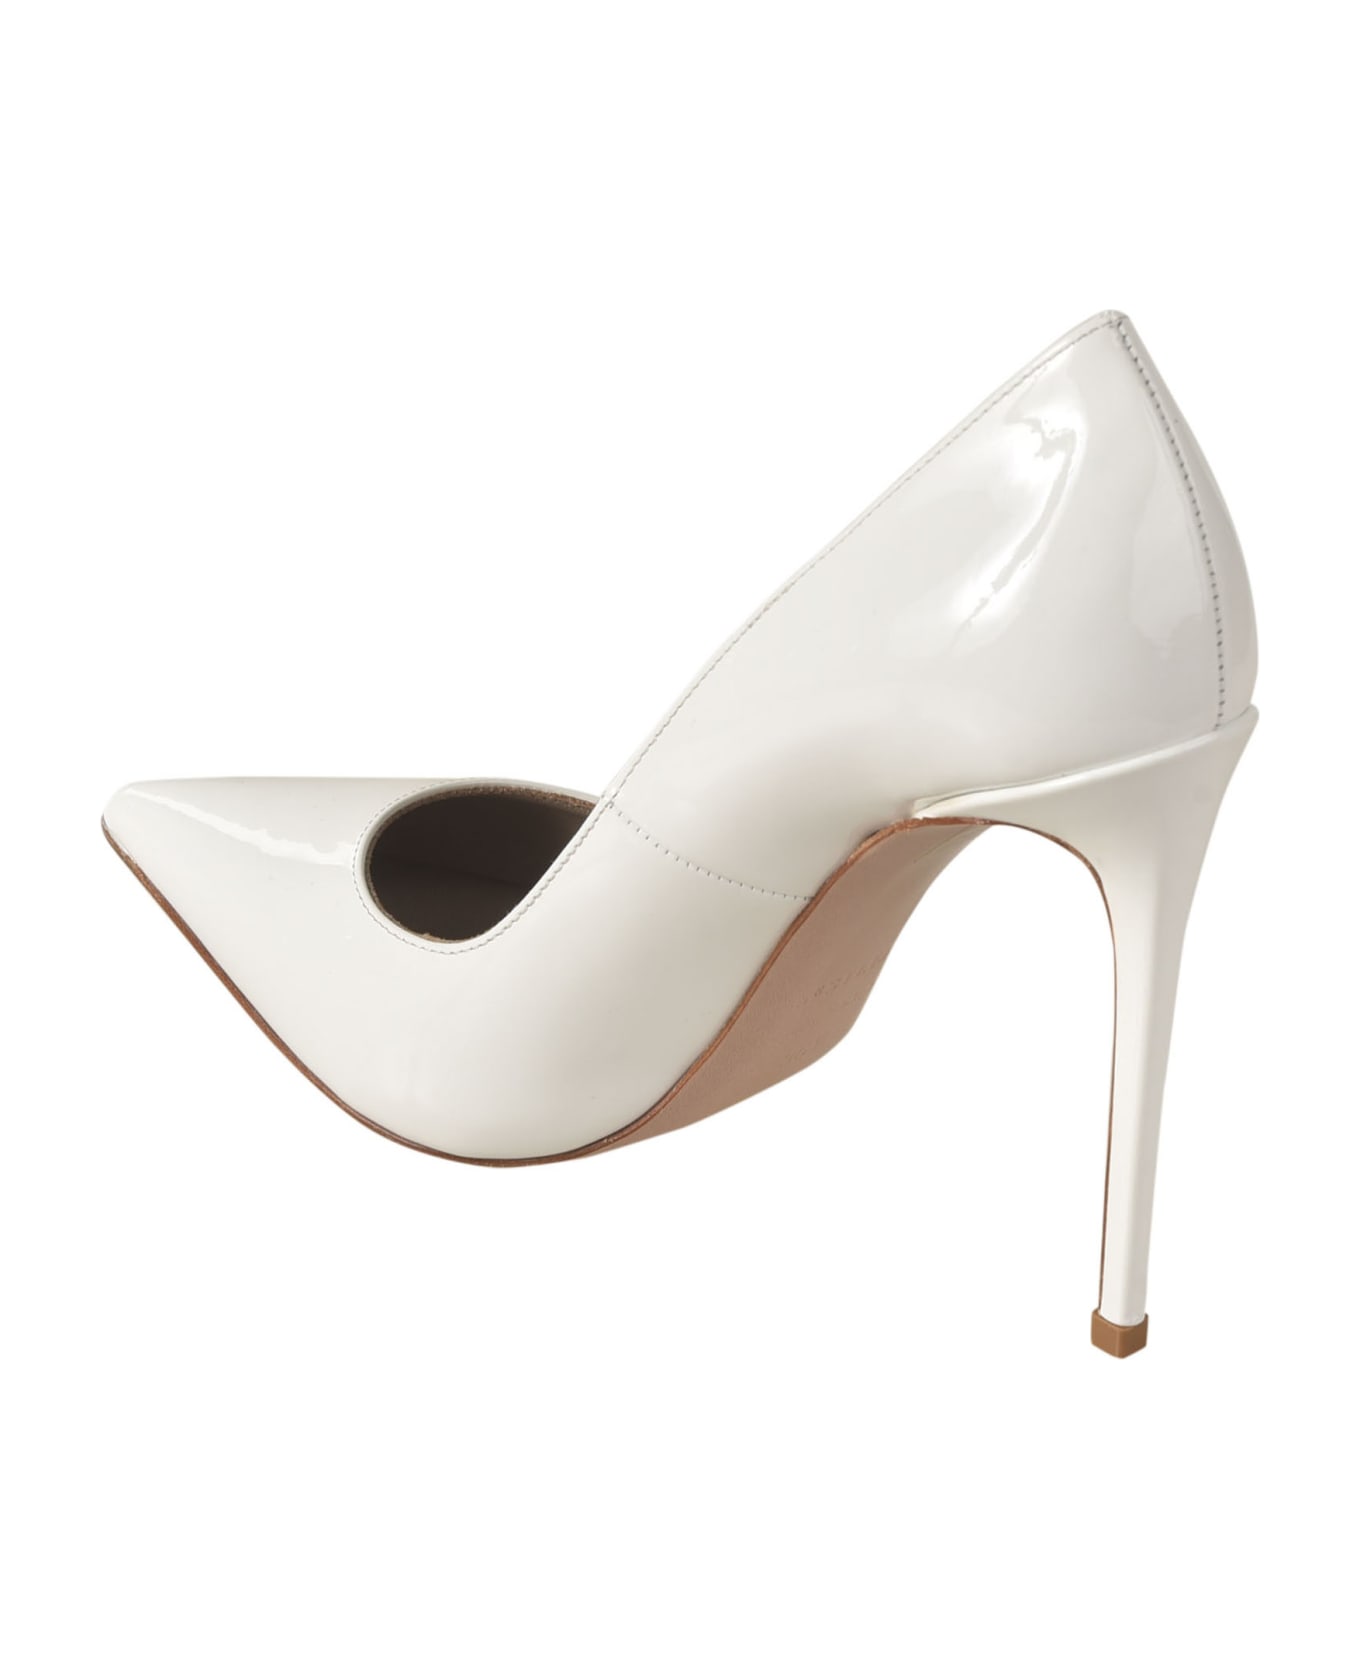 Le Silla Classic High-heel Pumps - White